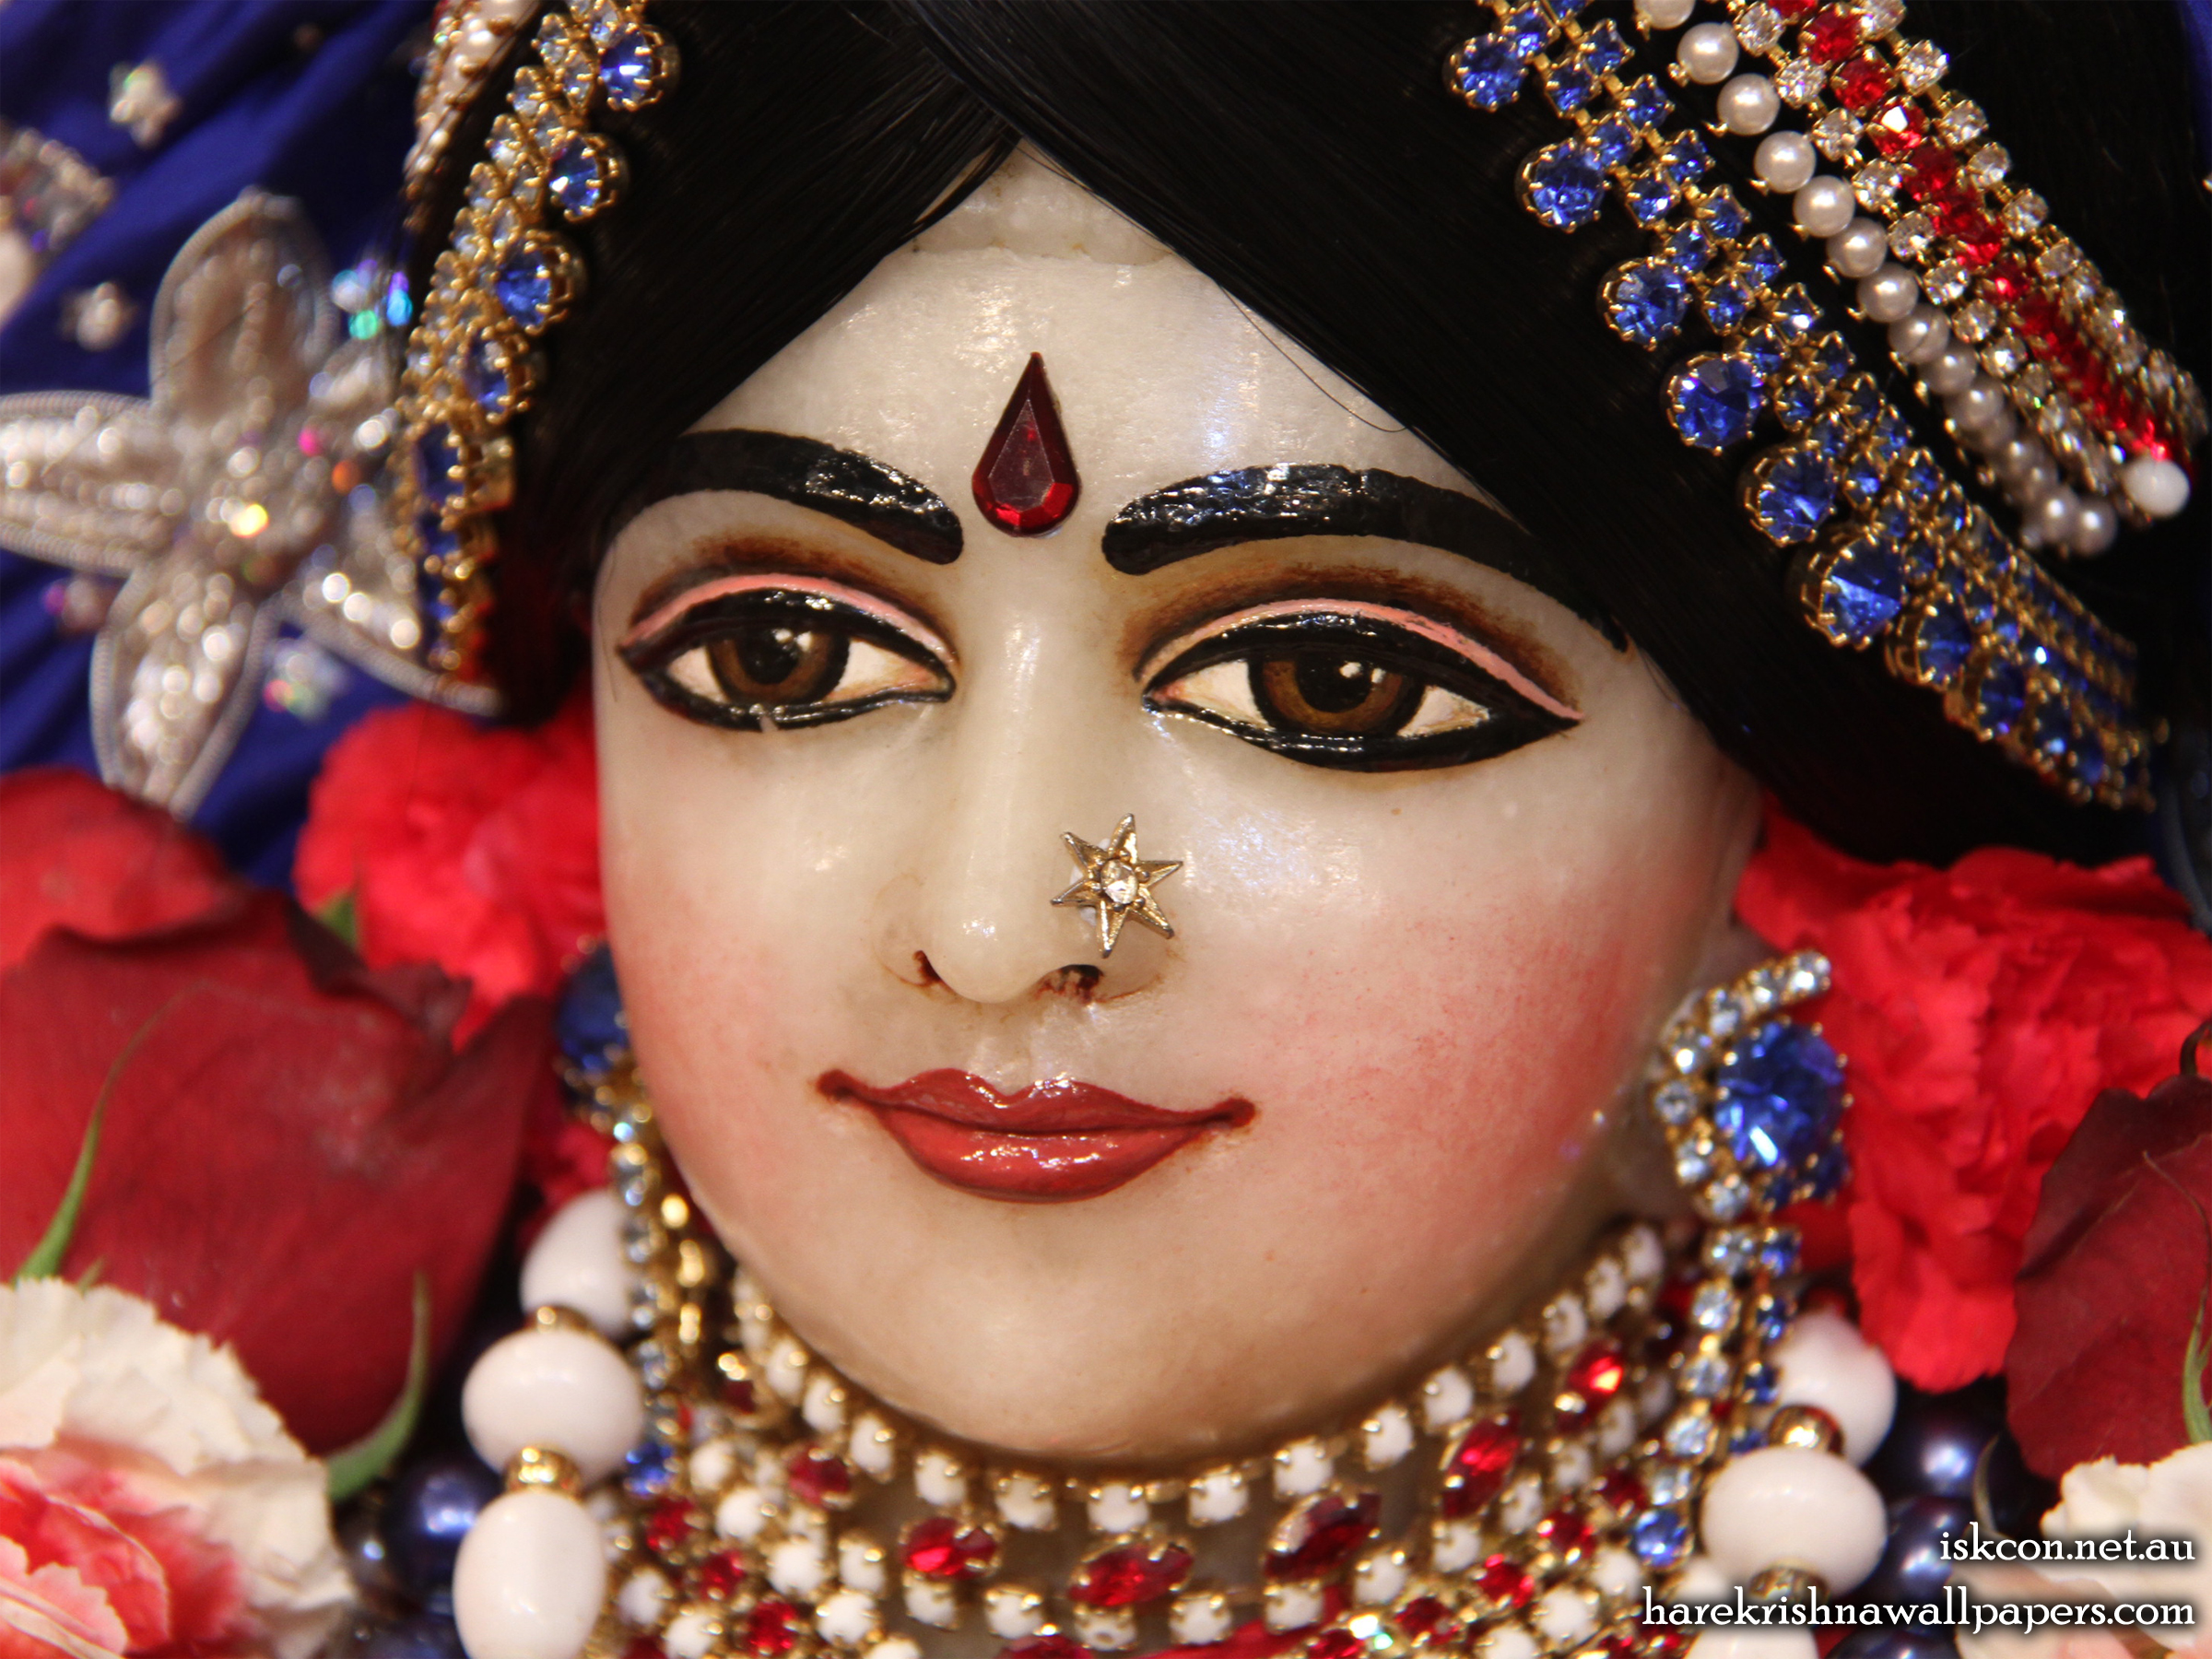 Sri Radha Close up Wallpaper (007) Size 2400x1800 Download